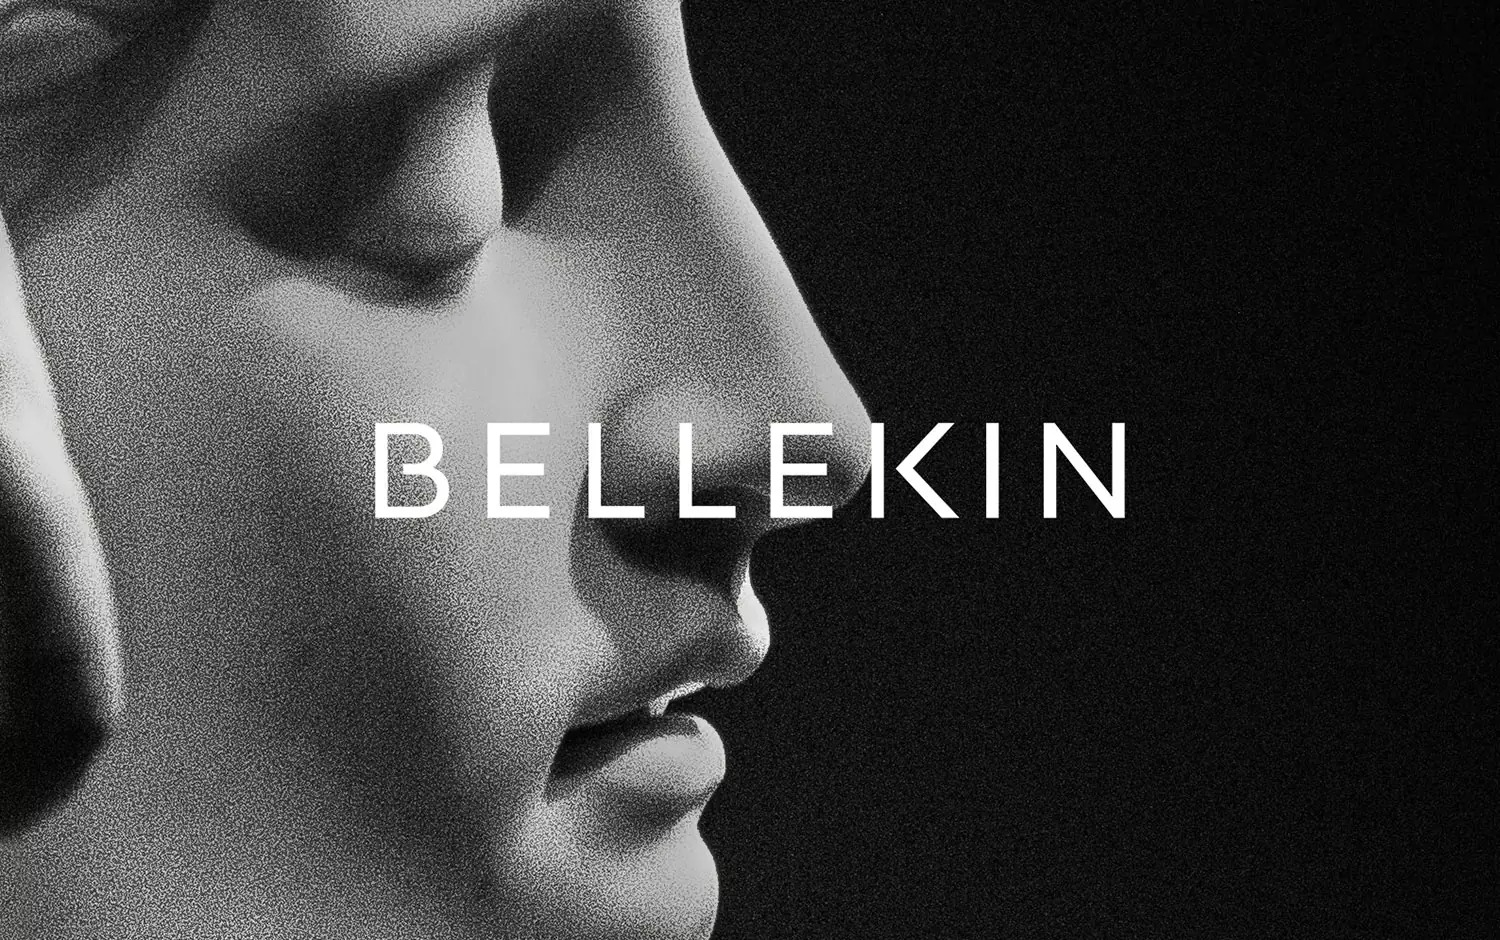 Bellekin护肤产品包装设计